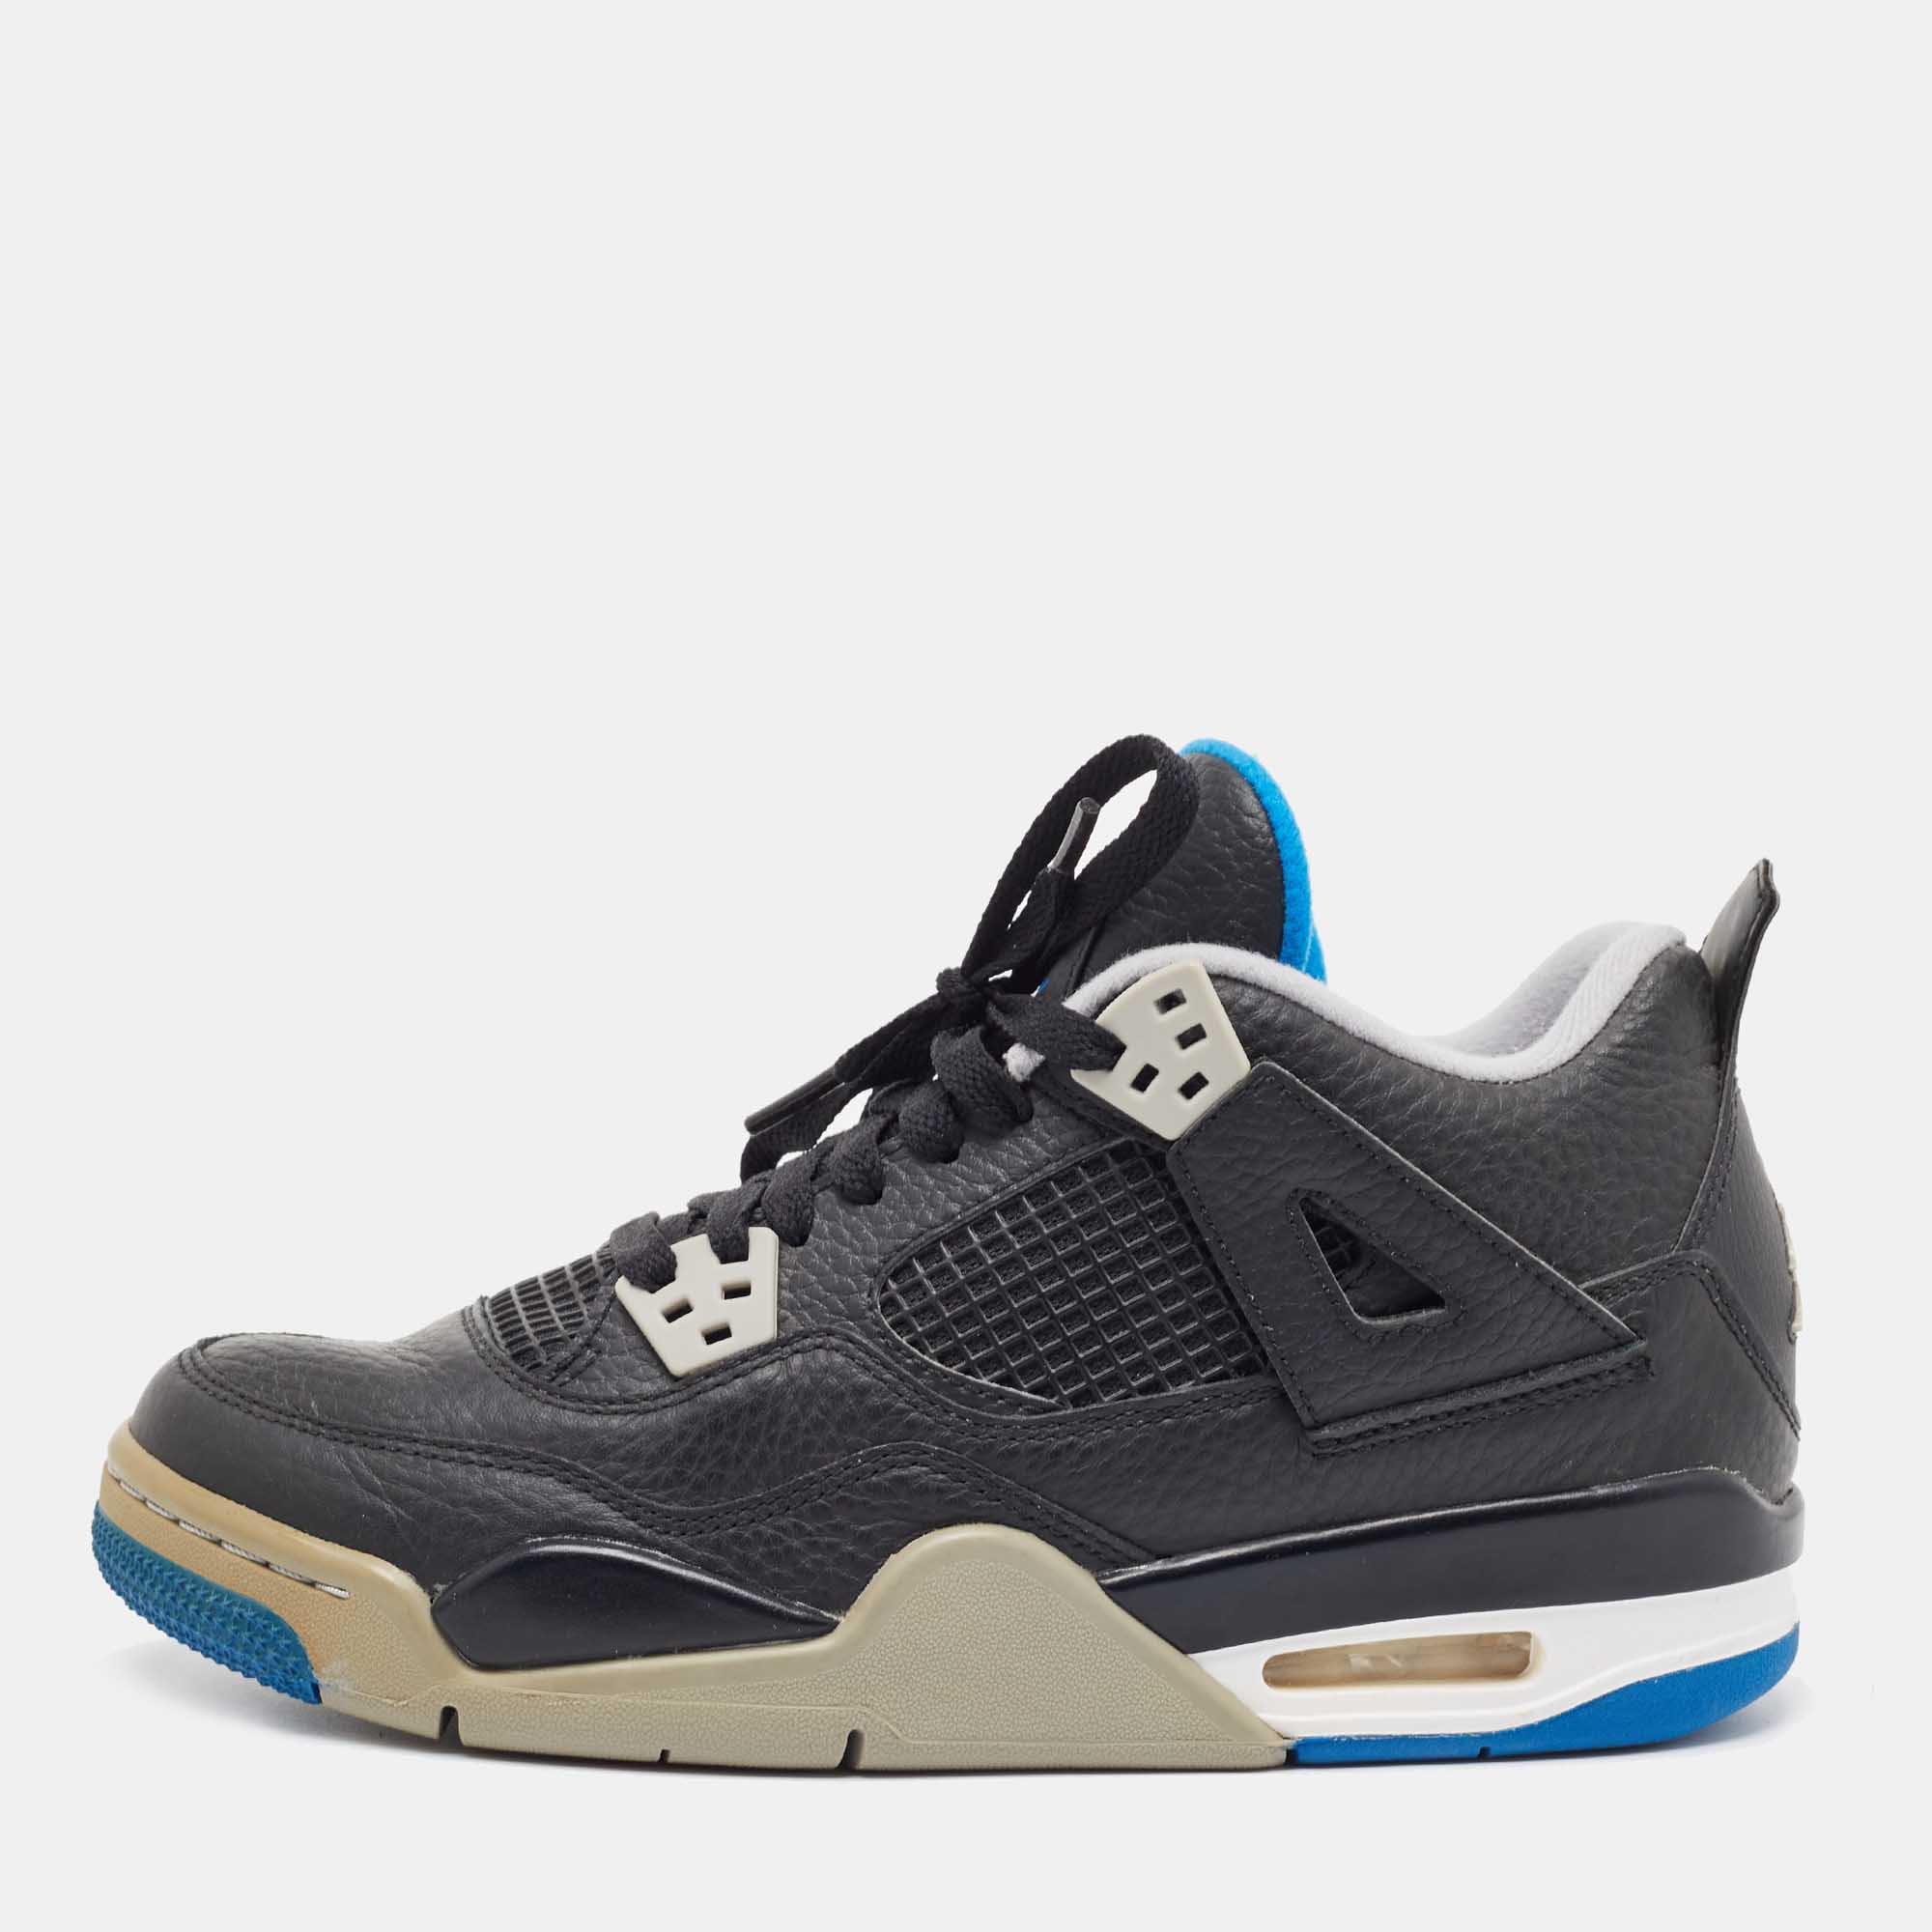 

Air Jordans Black Leather Jordan 4 Retro BG Sneakers Size